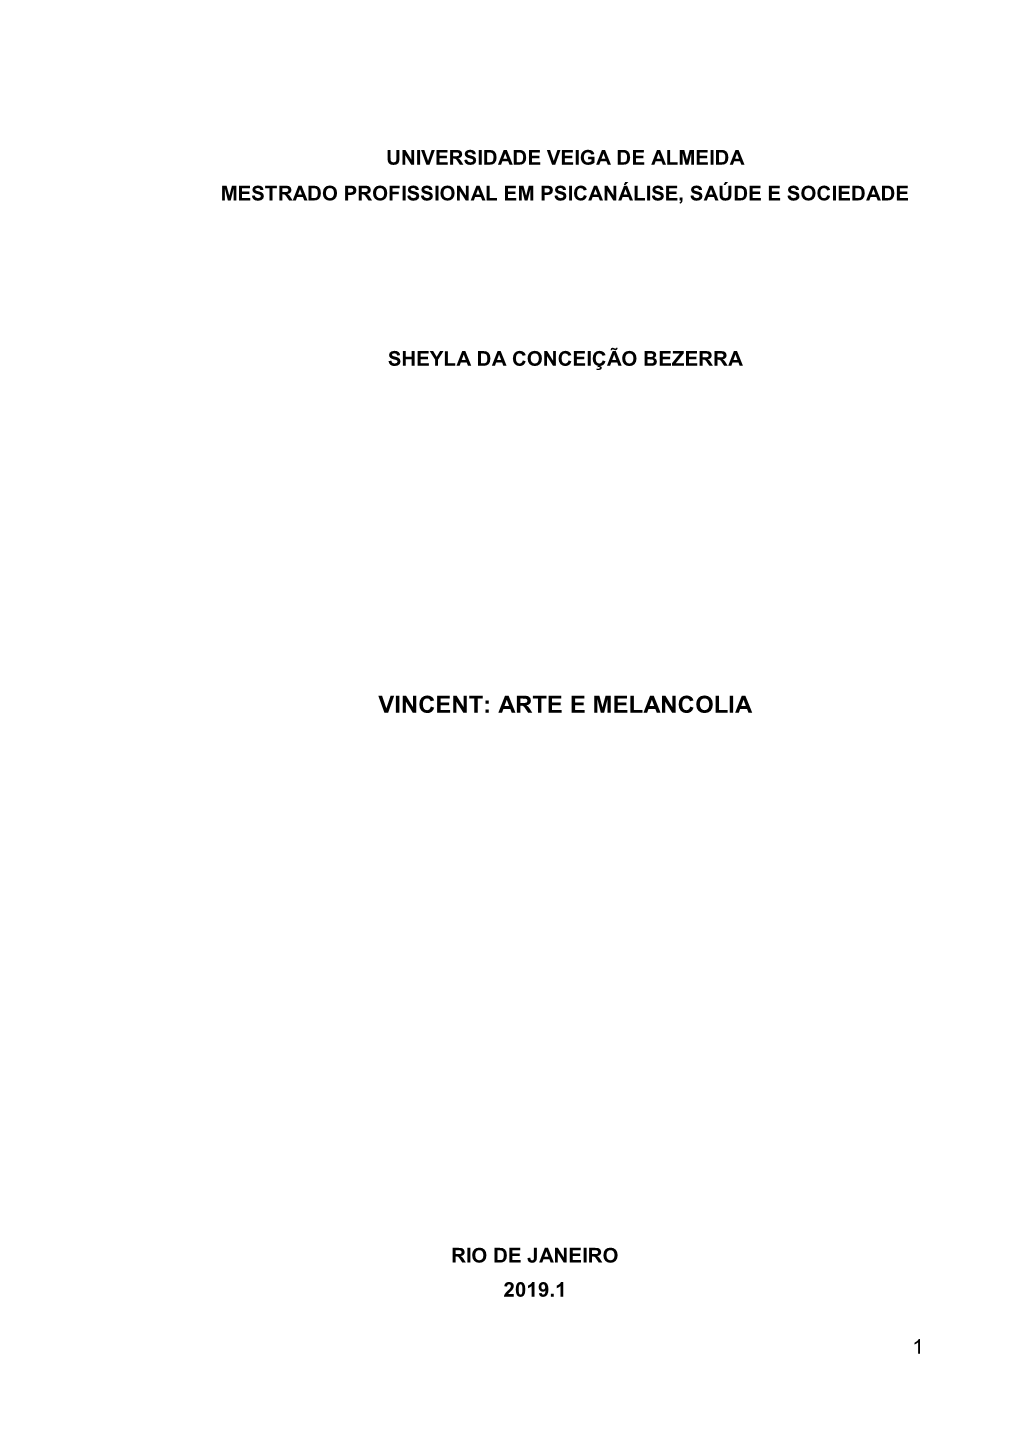 Vincent: Arte E Melancolia